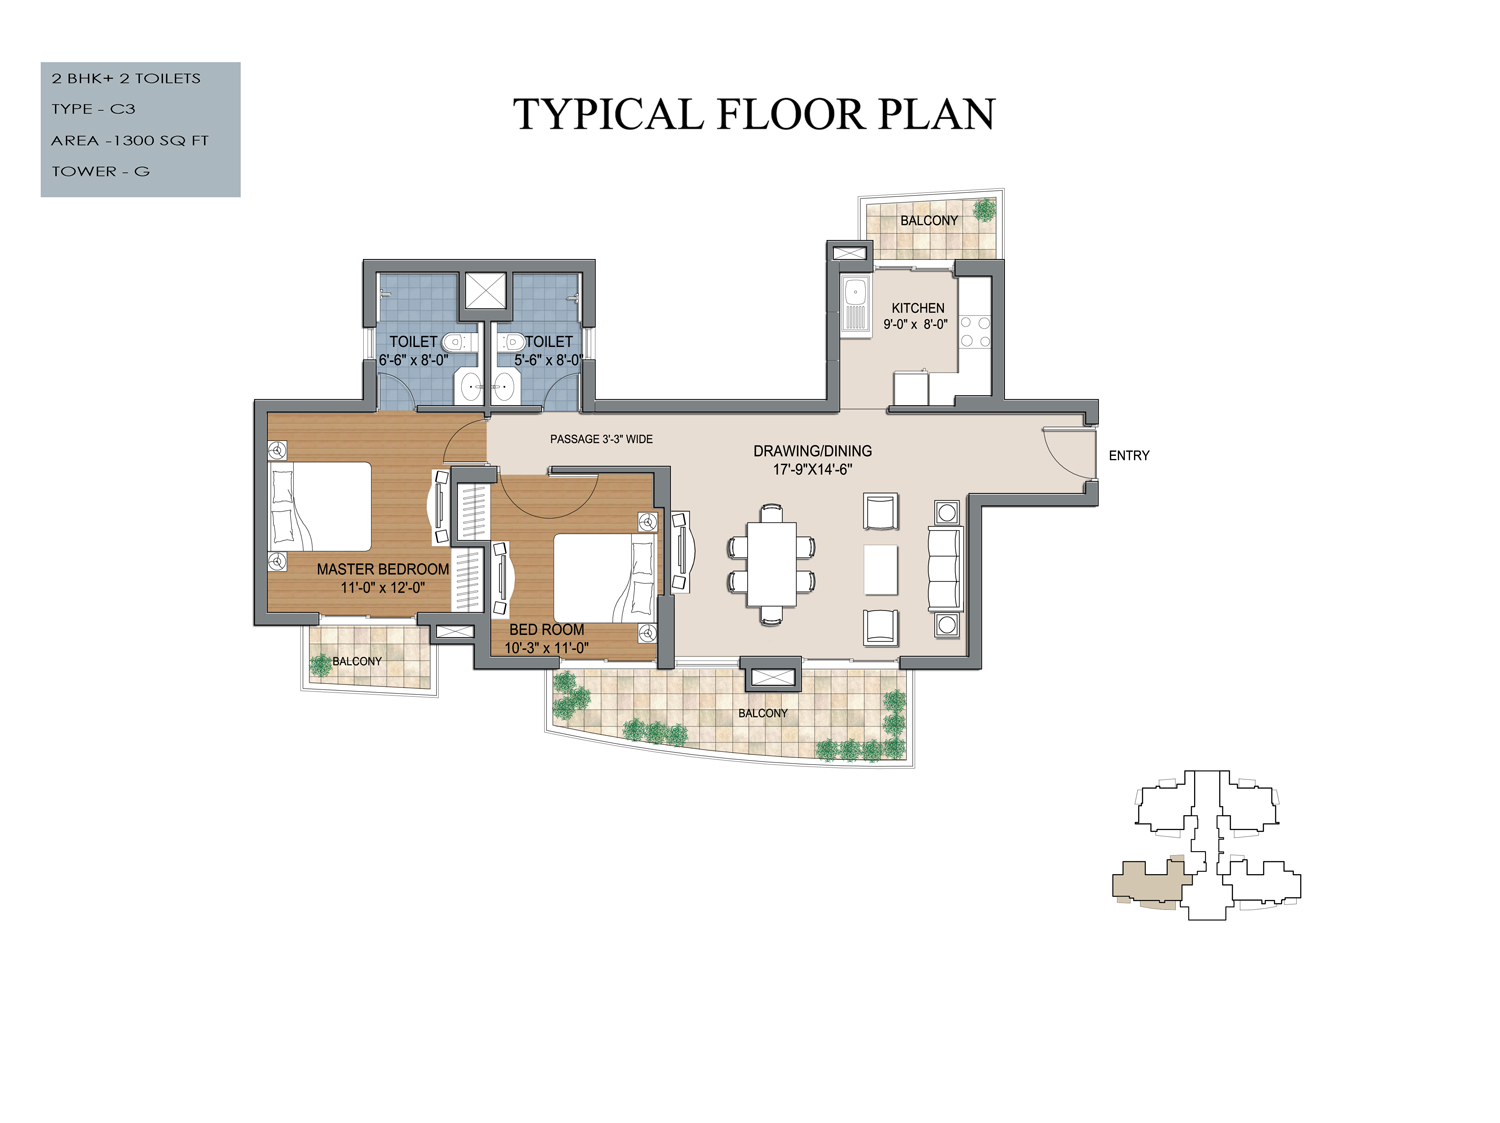 2 bhk floor plan in 1300 sq. feet area